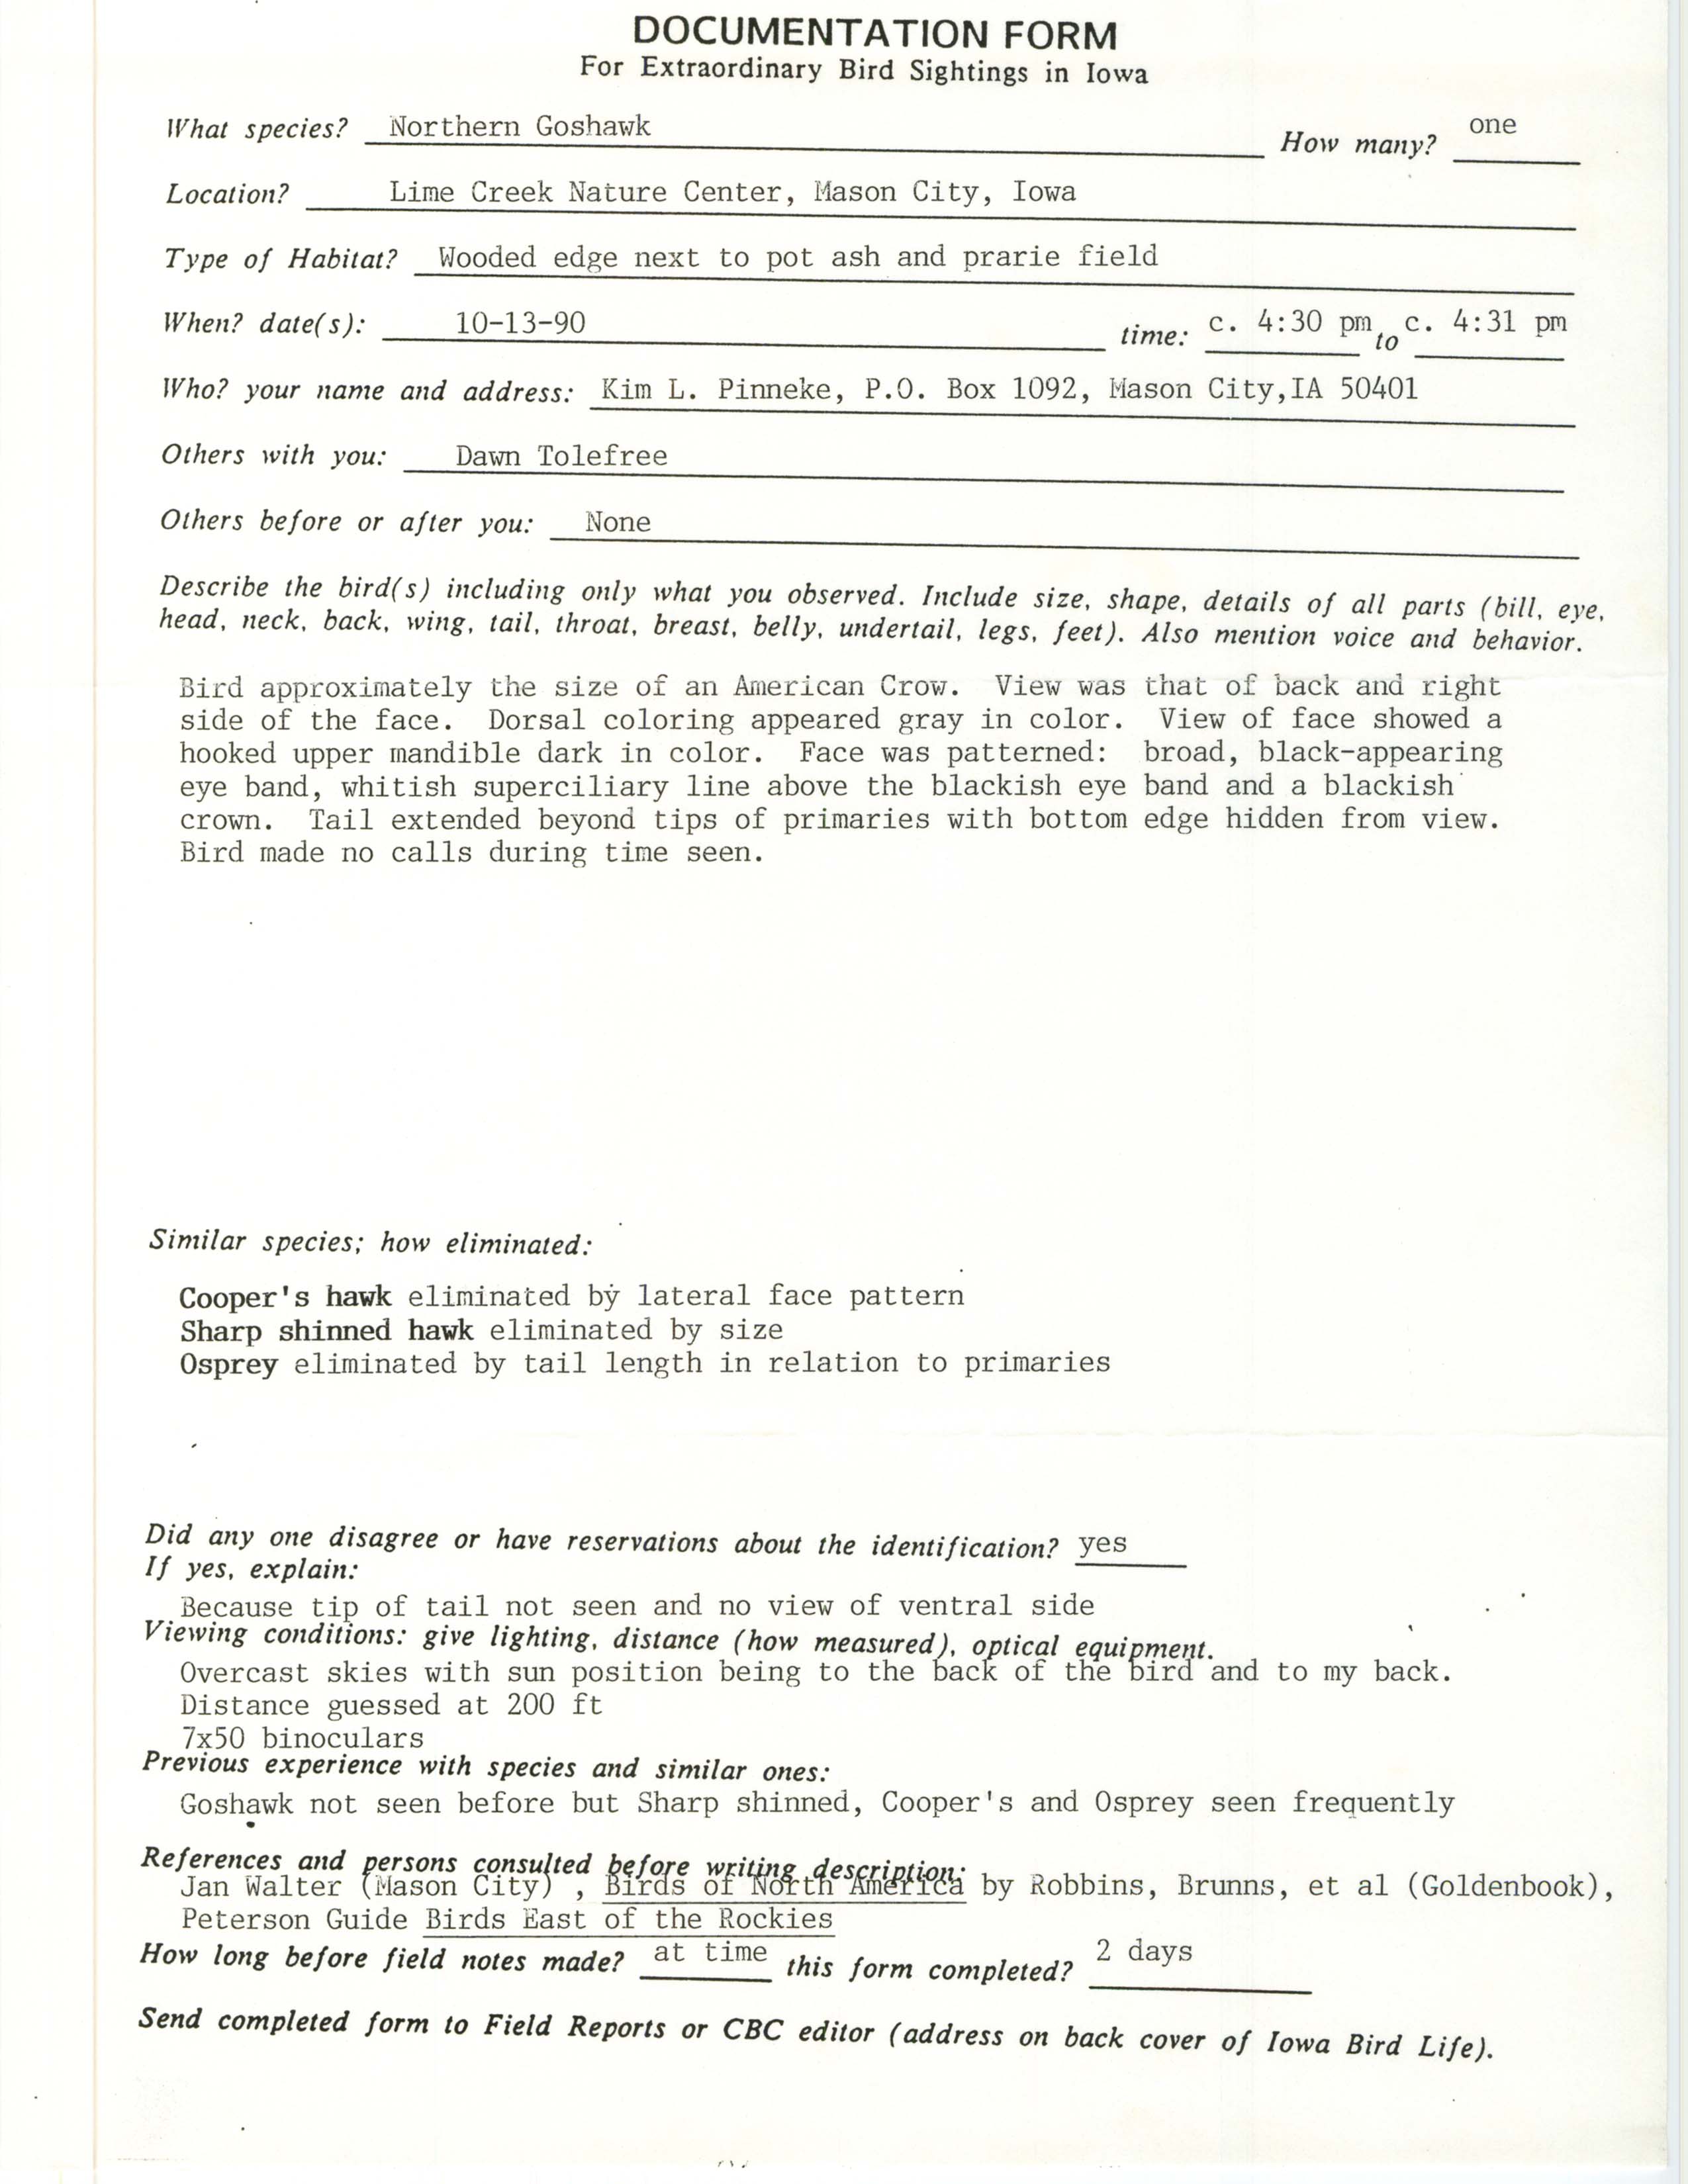 Rare bird documentation form for Northern Goshawk at Lime Creek Nature Center, 1990